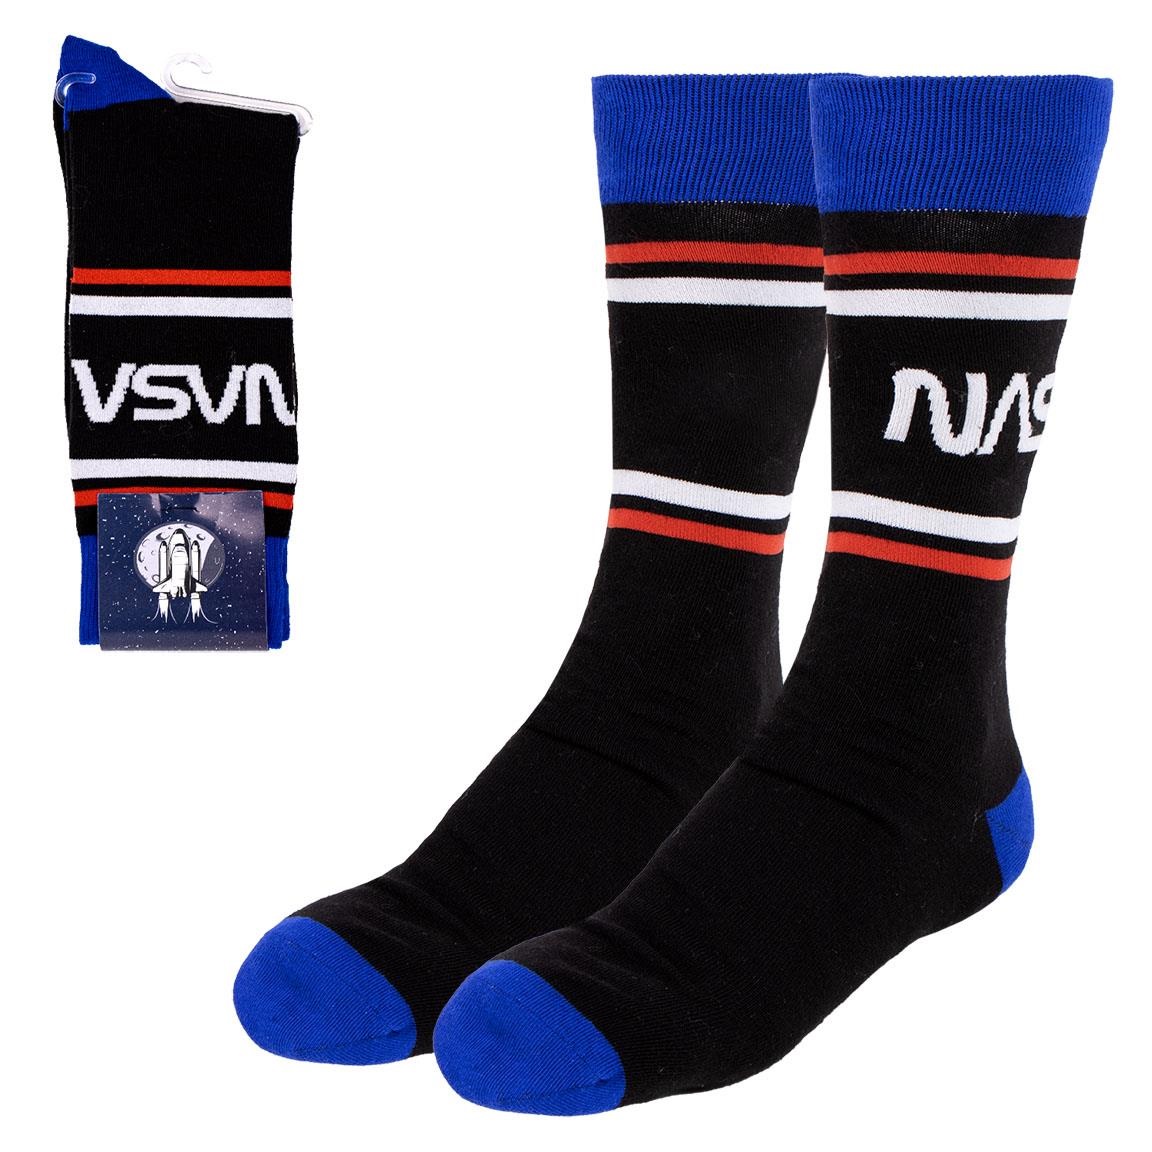 NASA - ponožky - černé M/L